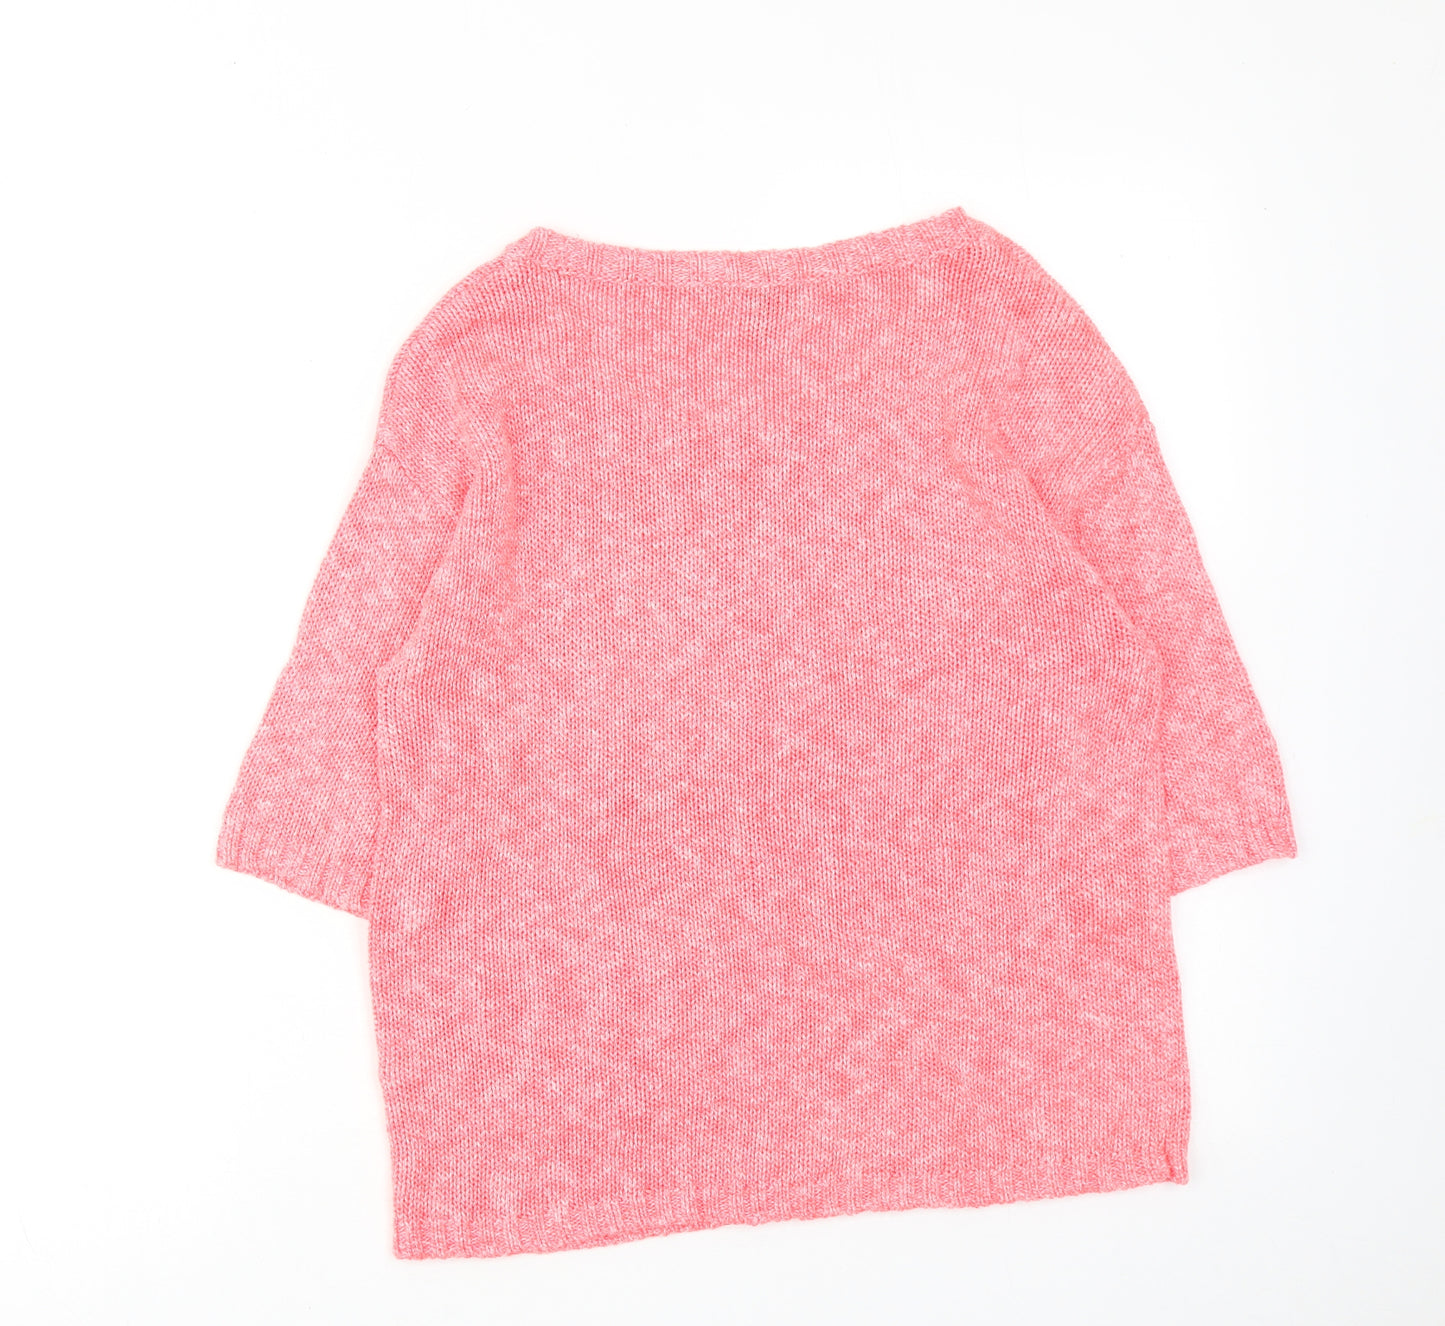 Topshop Womens Pink Round Neck Cotton Pullover Jumper Size 10